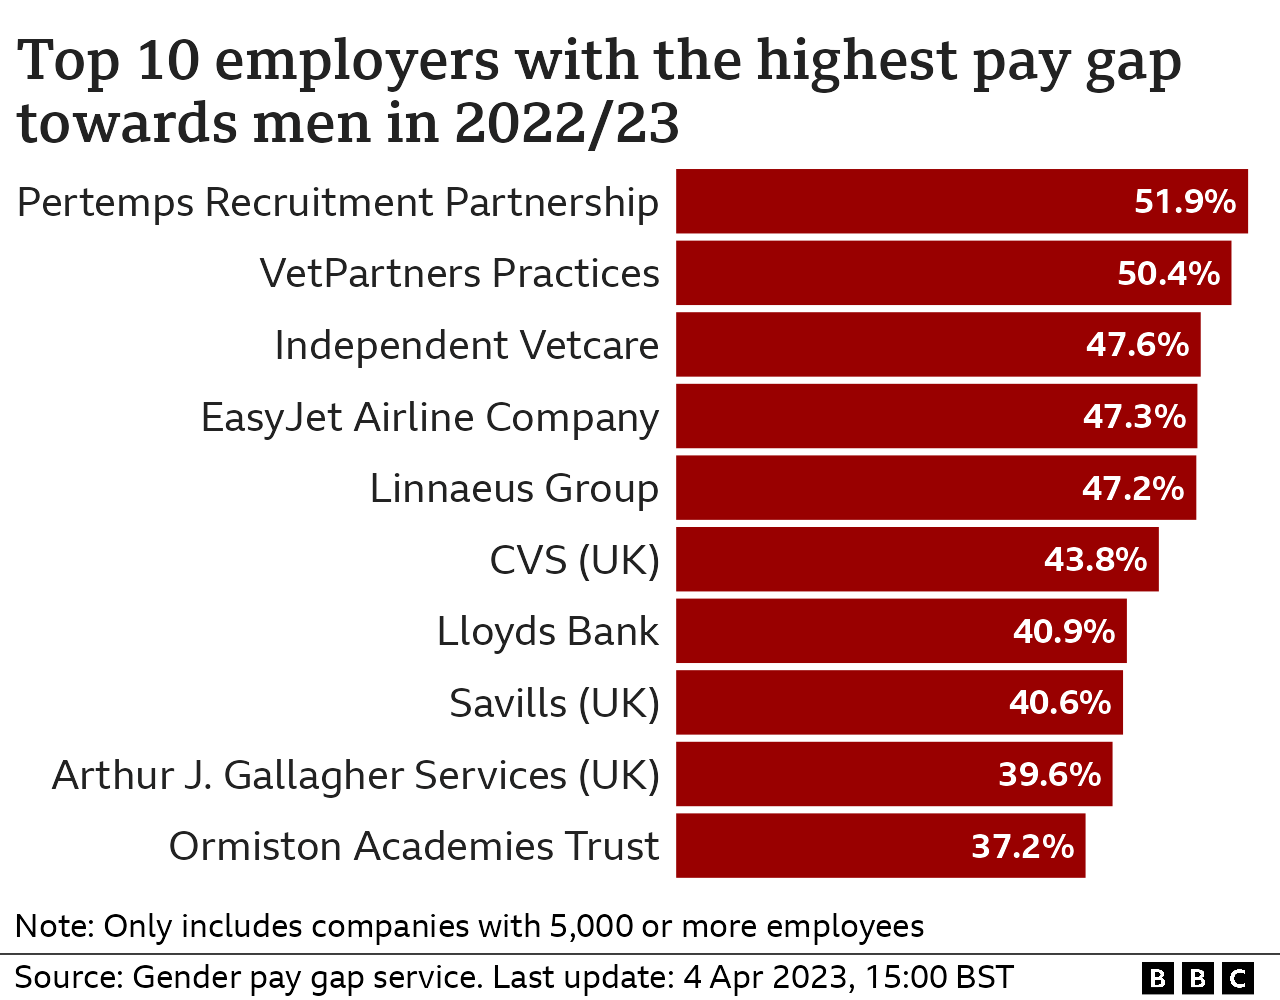 Bar chart showing the top 10 employers with the highest pay gaps towards men. They are Pertemps Recruitment Partnership, VetPartners Practices, Independent Vetcare, EasyJet Airline Company, Linnaeus Group, CVS (UK), Lloyds Bank, Savills (UK), Arthur J. Gallagher Services (UK), Ormiston Academies Trust.